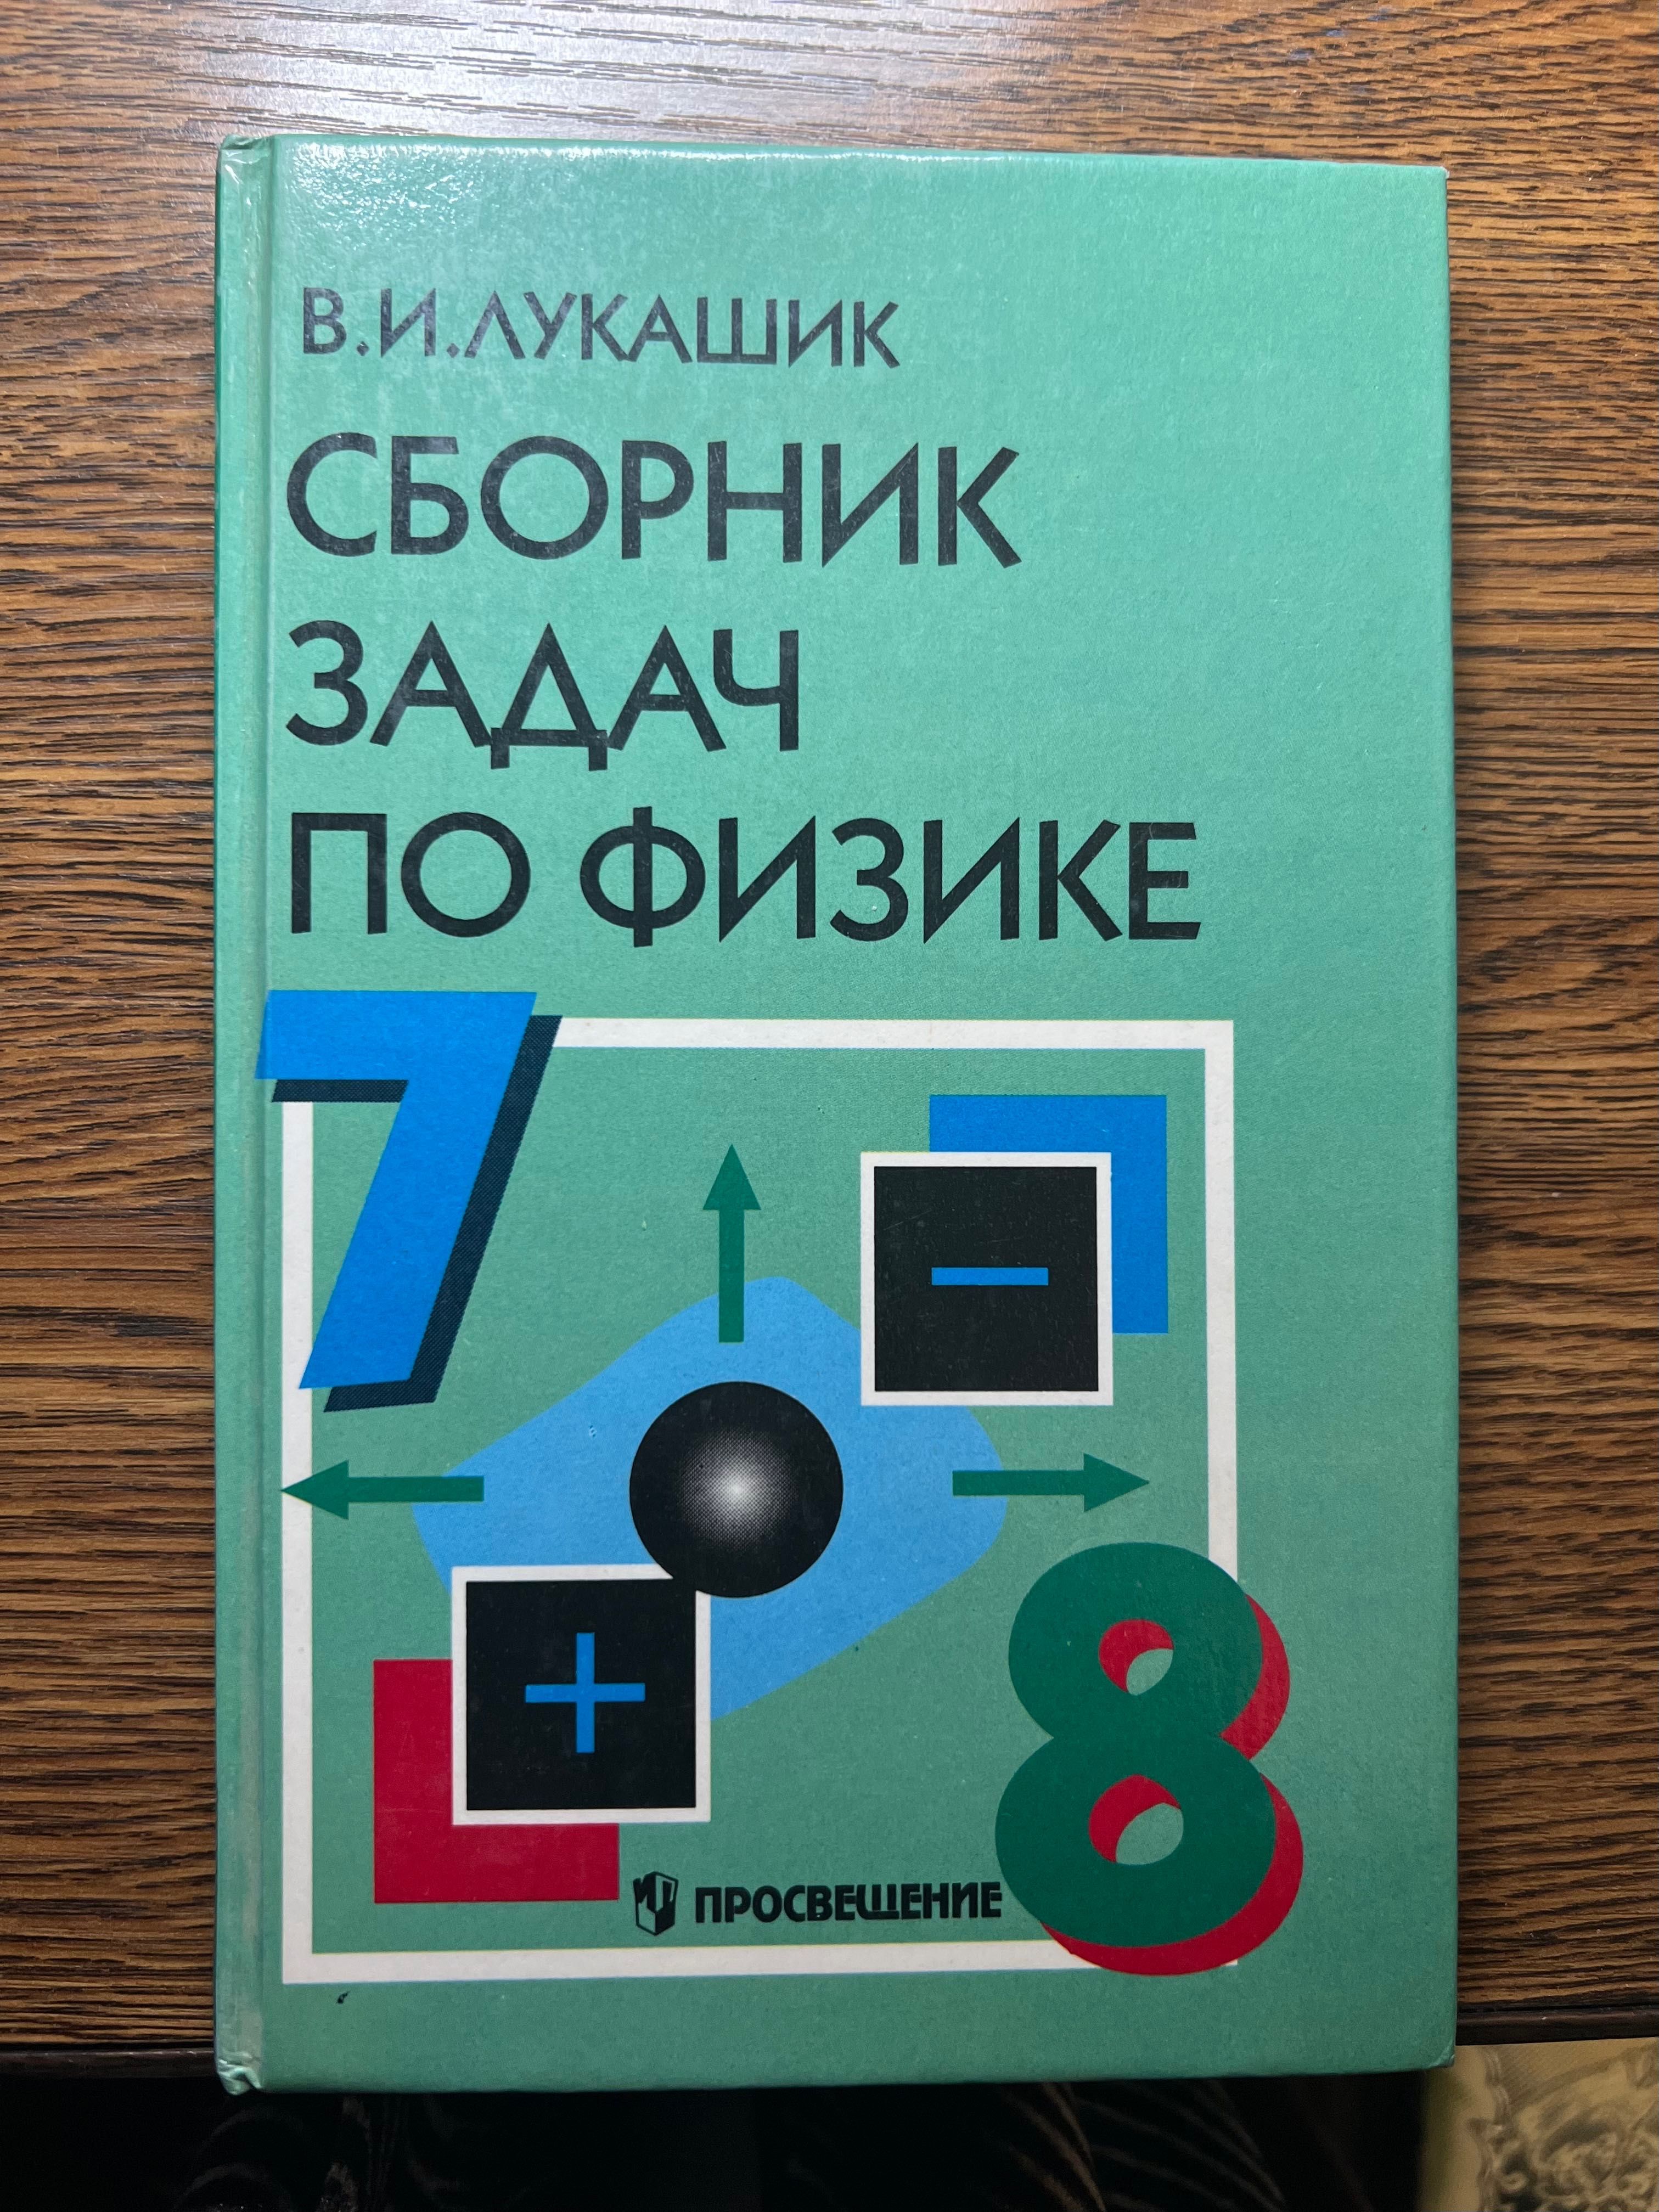 Сборник задач по физике 7-8 класс Лукашик В.И.